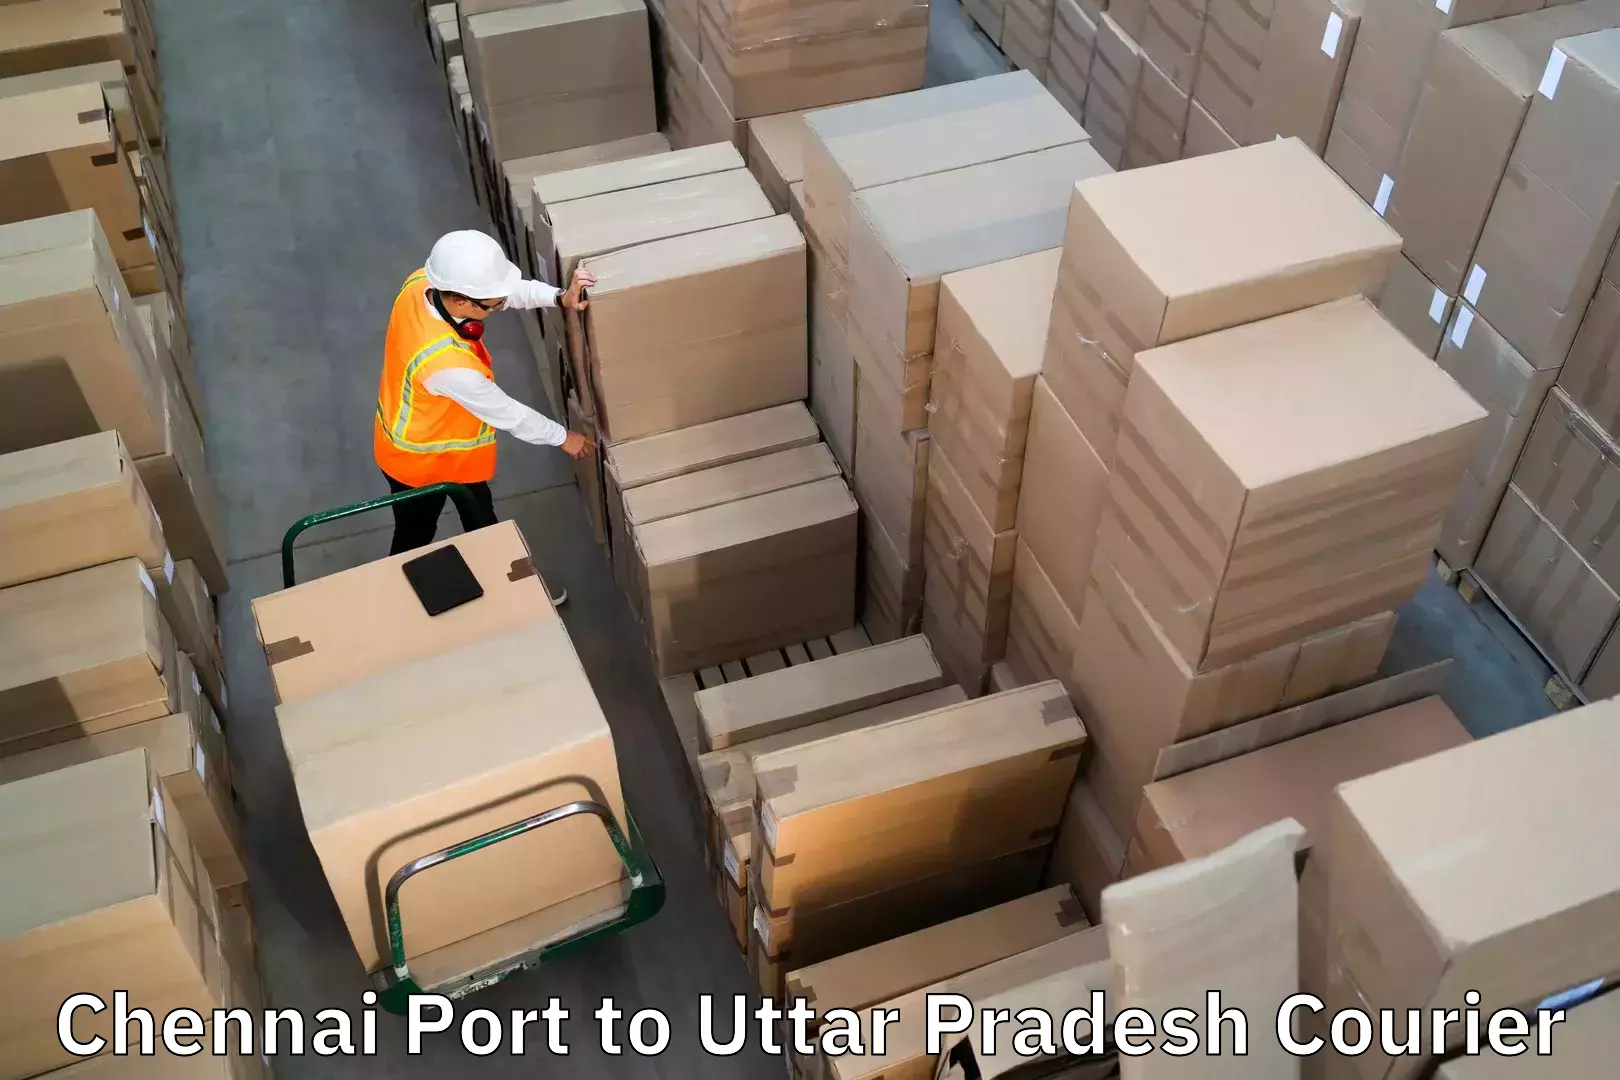 Luggage shipment specialists Chennai Port to Nawabganj